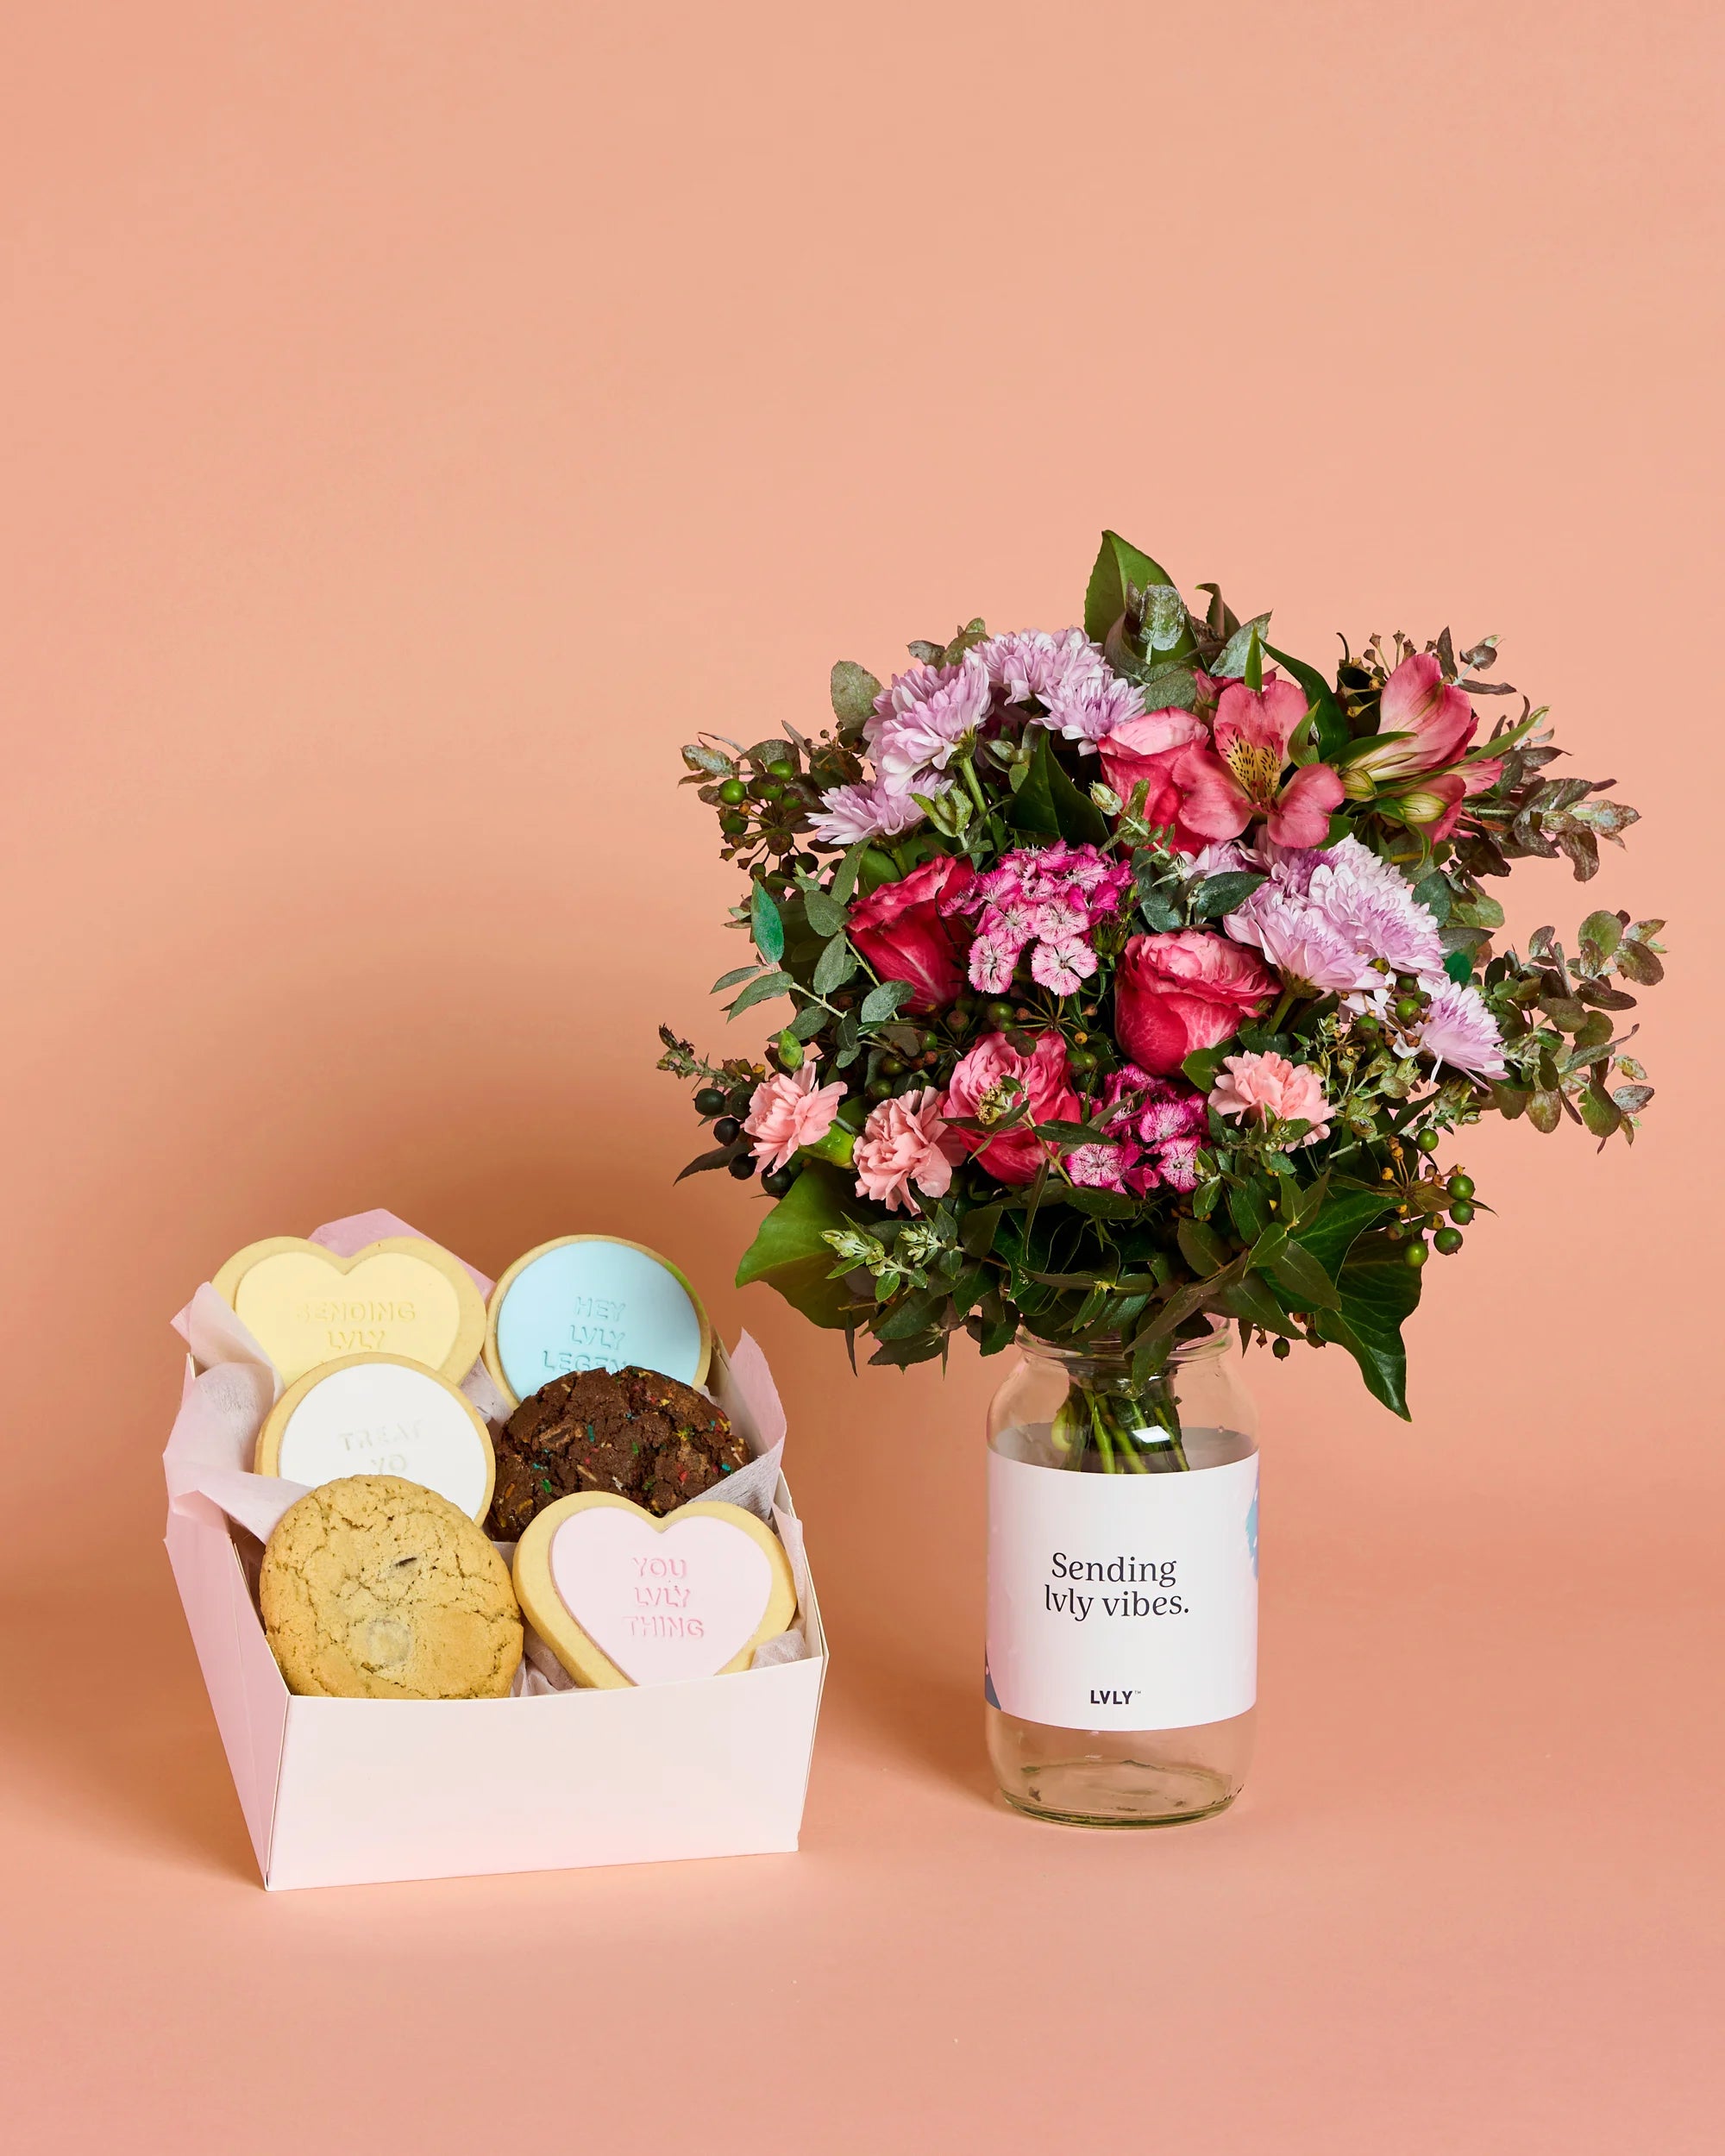 Cookie Combo + Flowers